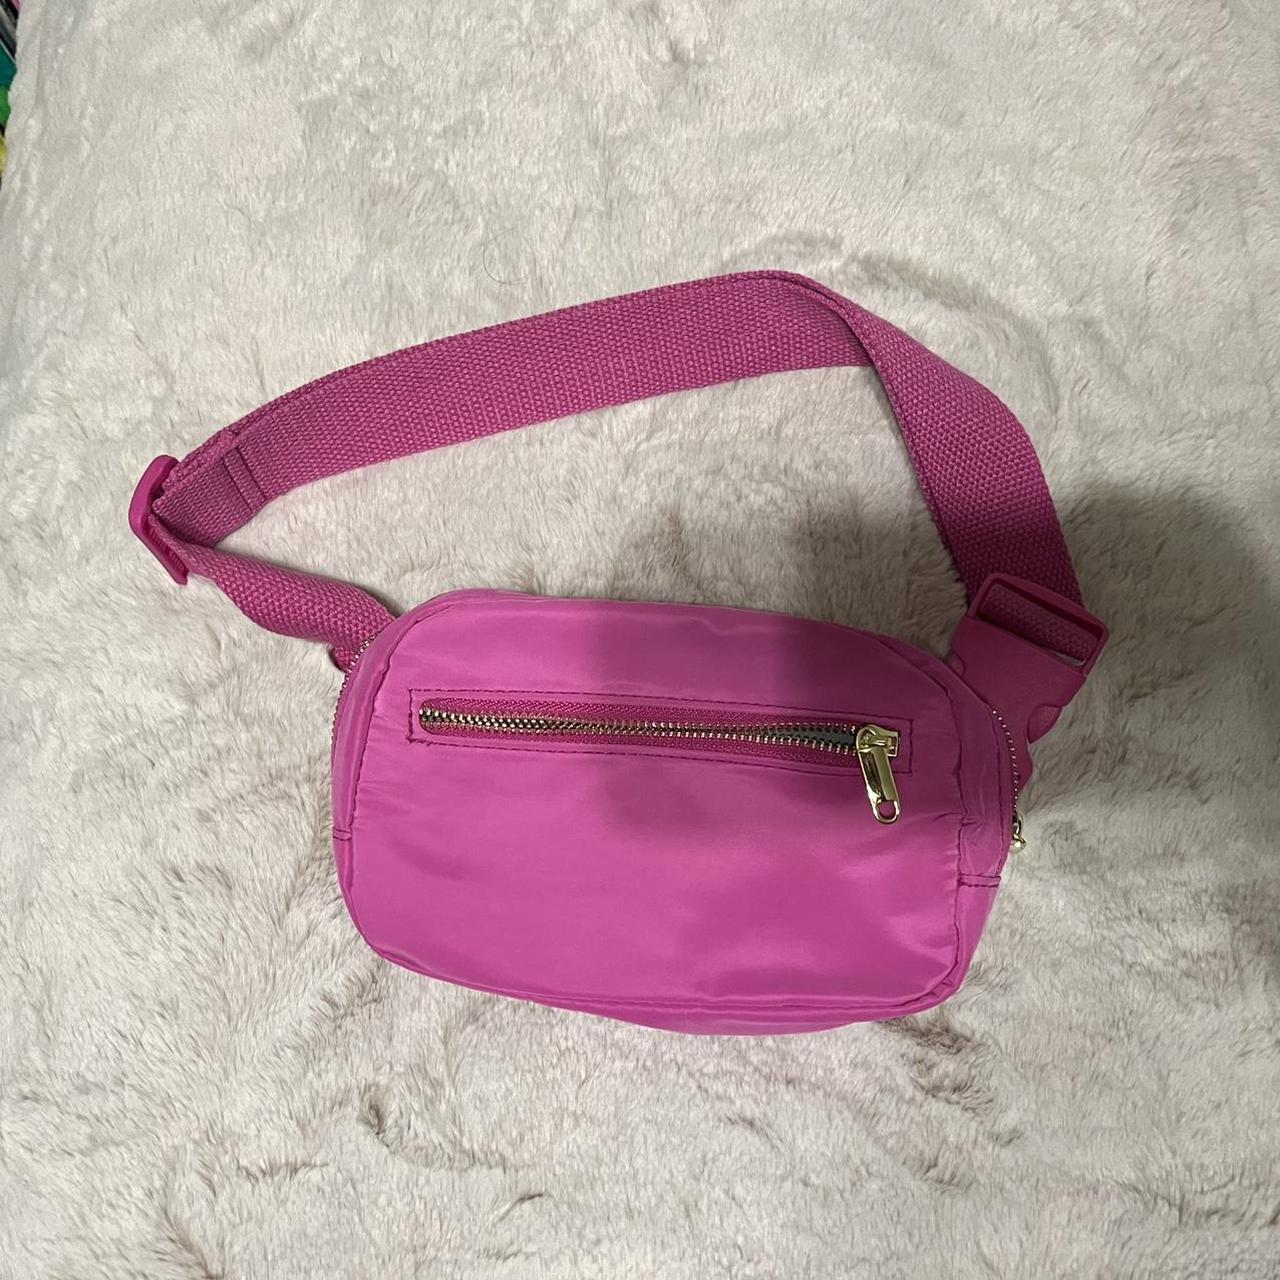 sonic pink belt bag adjustable strap with buckle and... - Depop